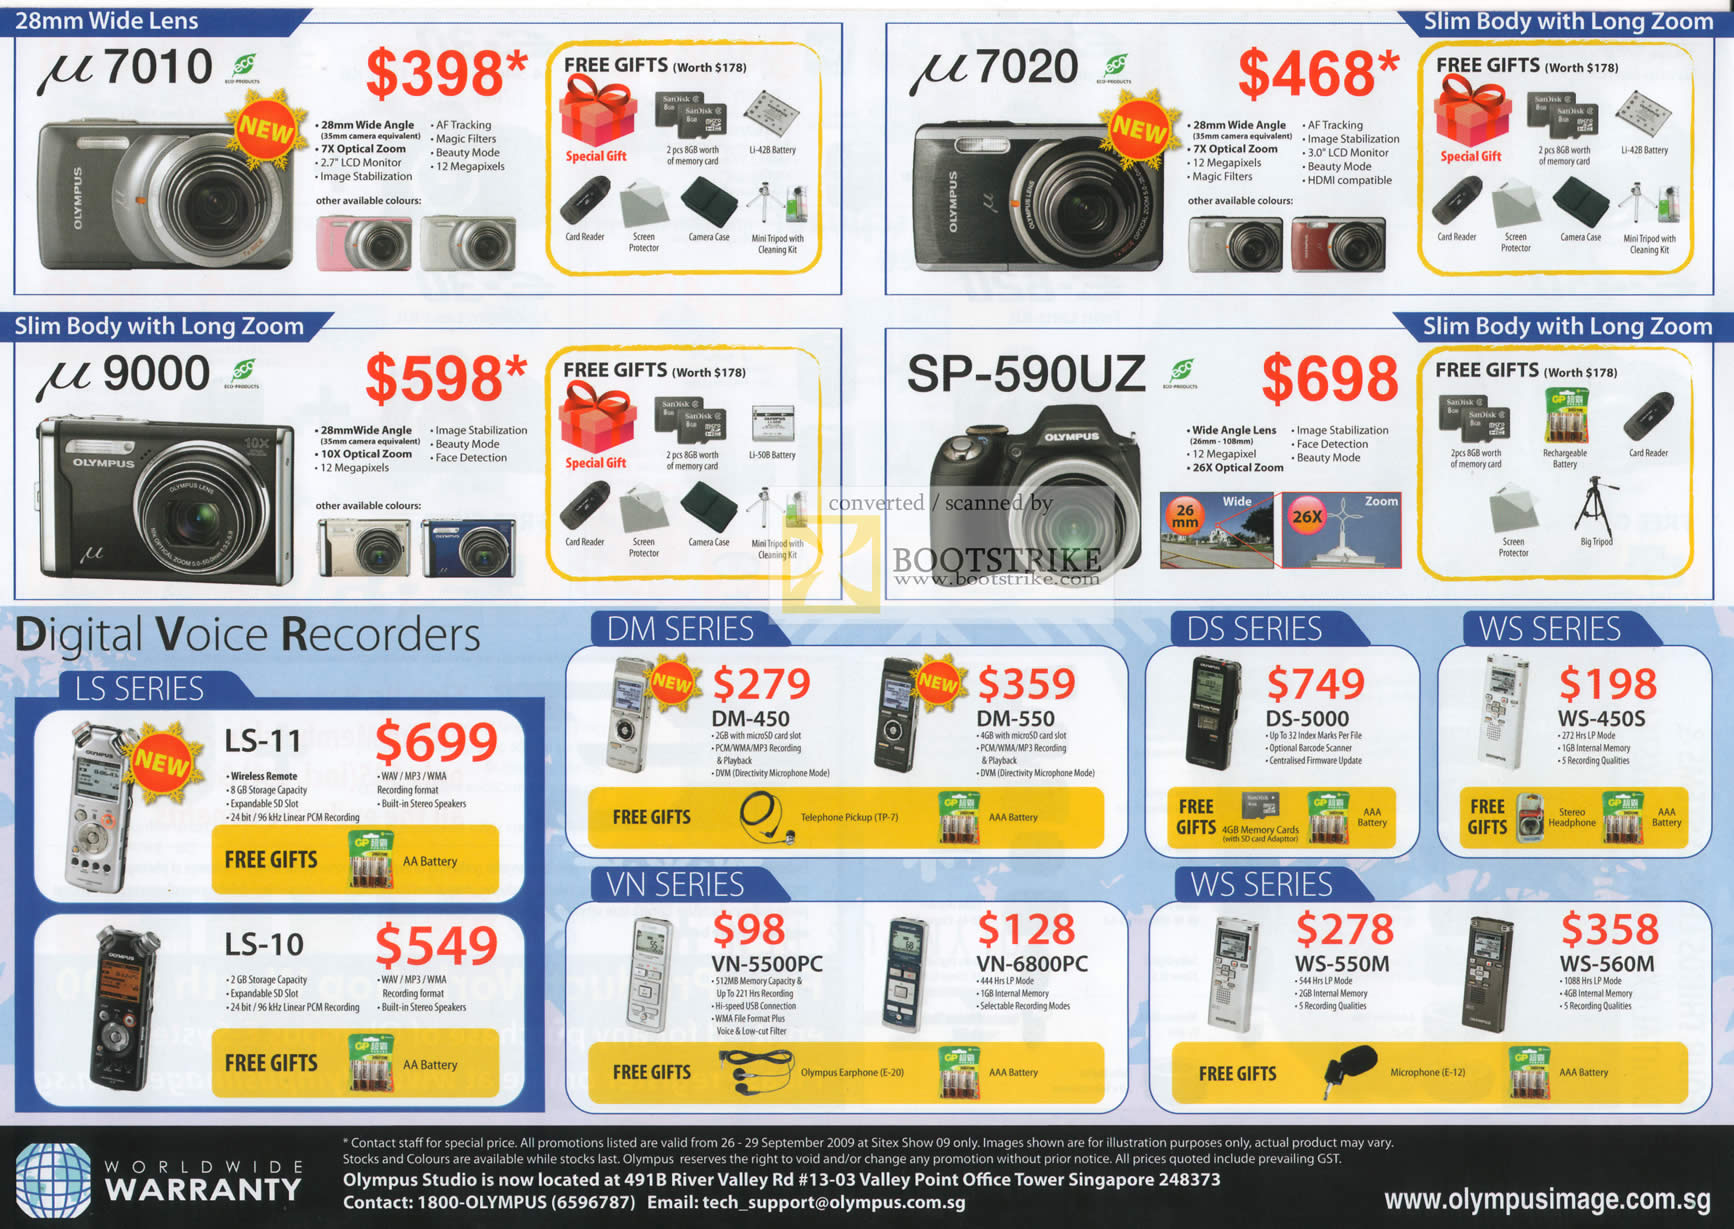 Sitex 2009 price list image brochure of Olympus Digital Cameras U7010 U900 U7020 Sp 590uz Digital Voice Recorders